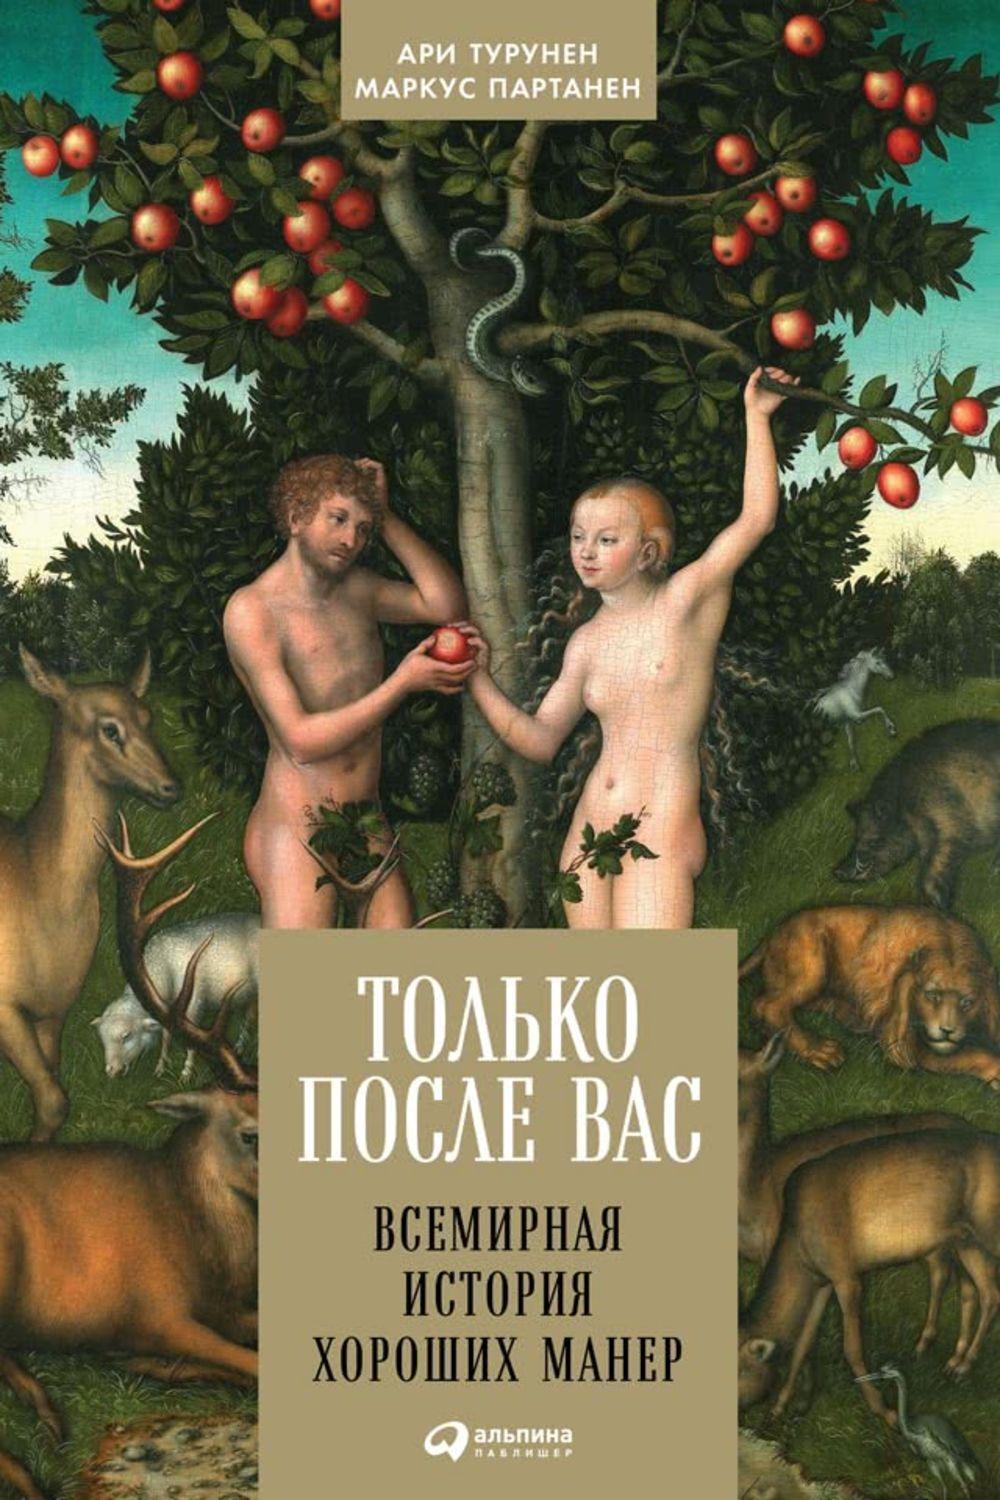 Книги Ари Турунен скачать бесплатно | 7books.ru